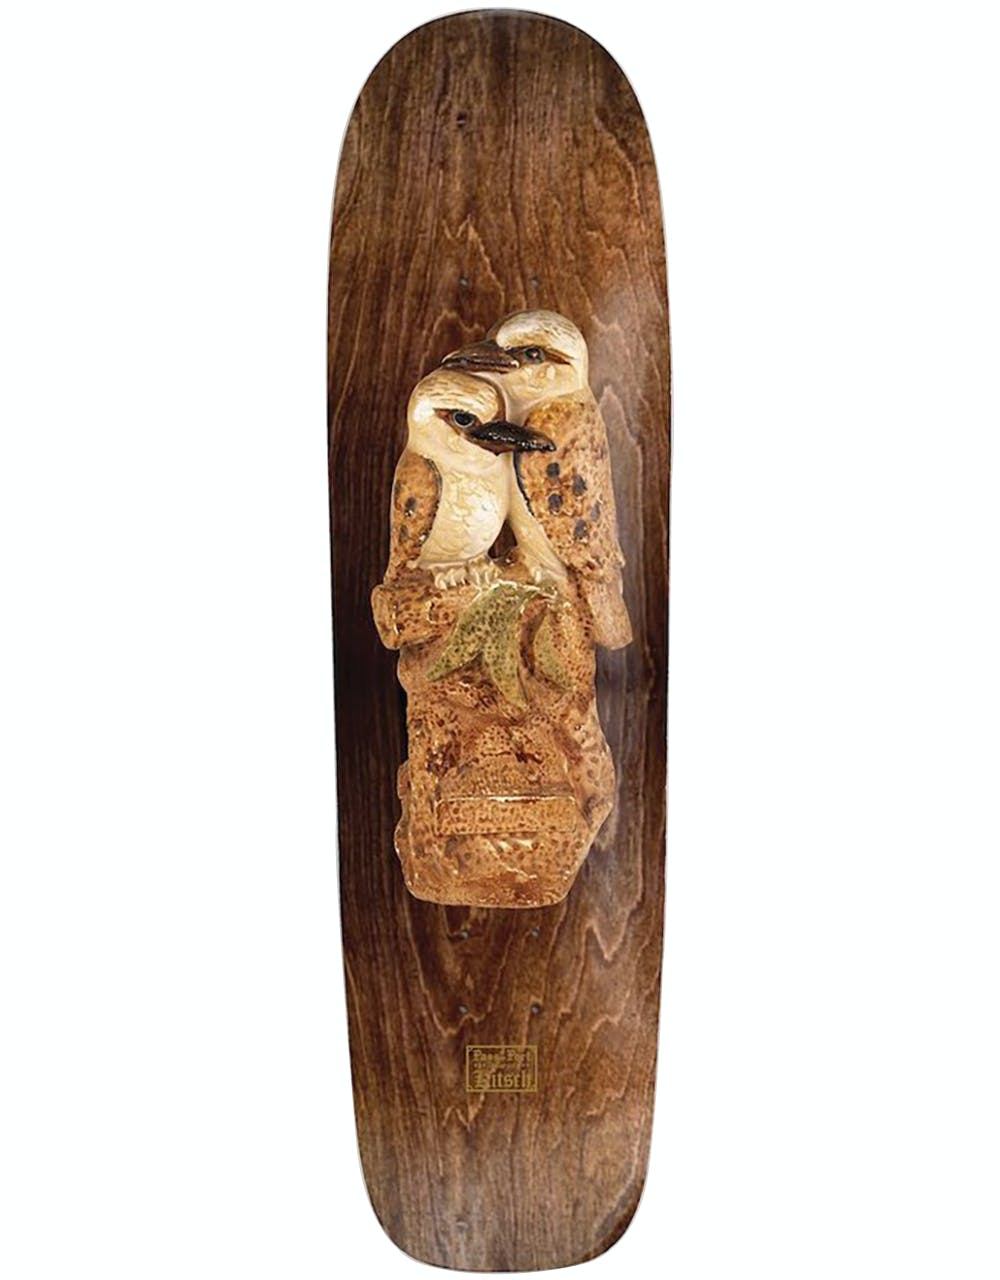 Pass Port Kookaburra 'Treasury of Kitsch Series' Skateboard Deck - Spade Shape 8.875"